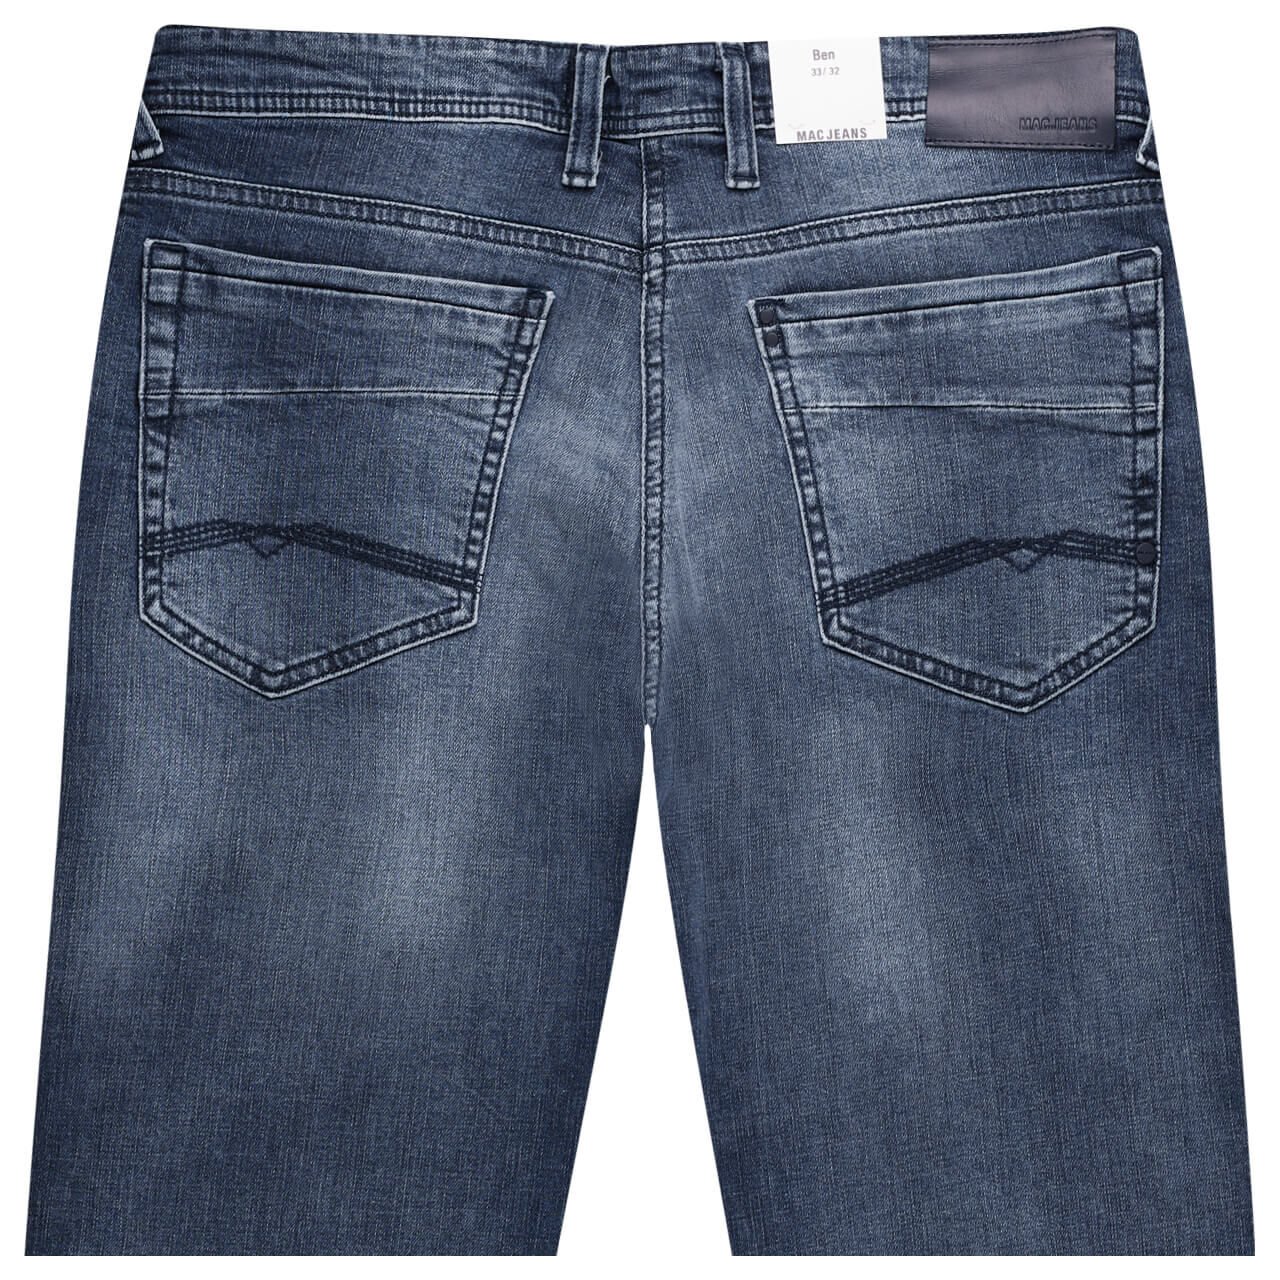 MAC Ben Jeans dark indigo authentic